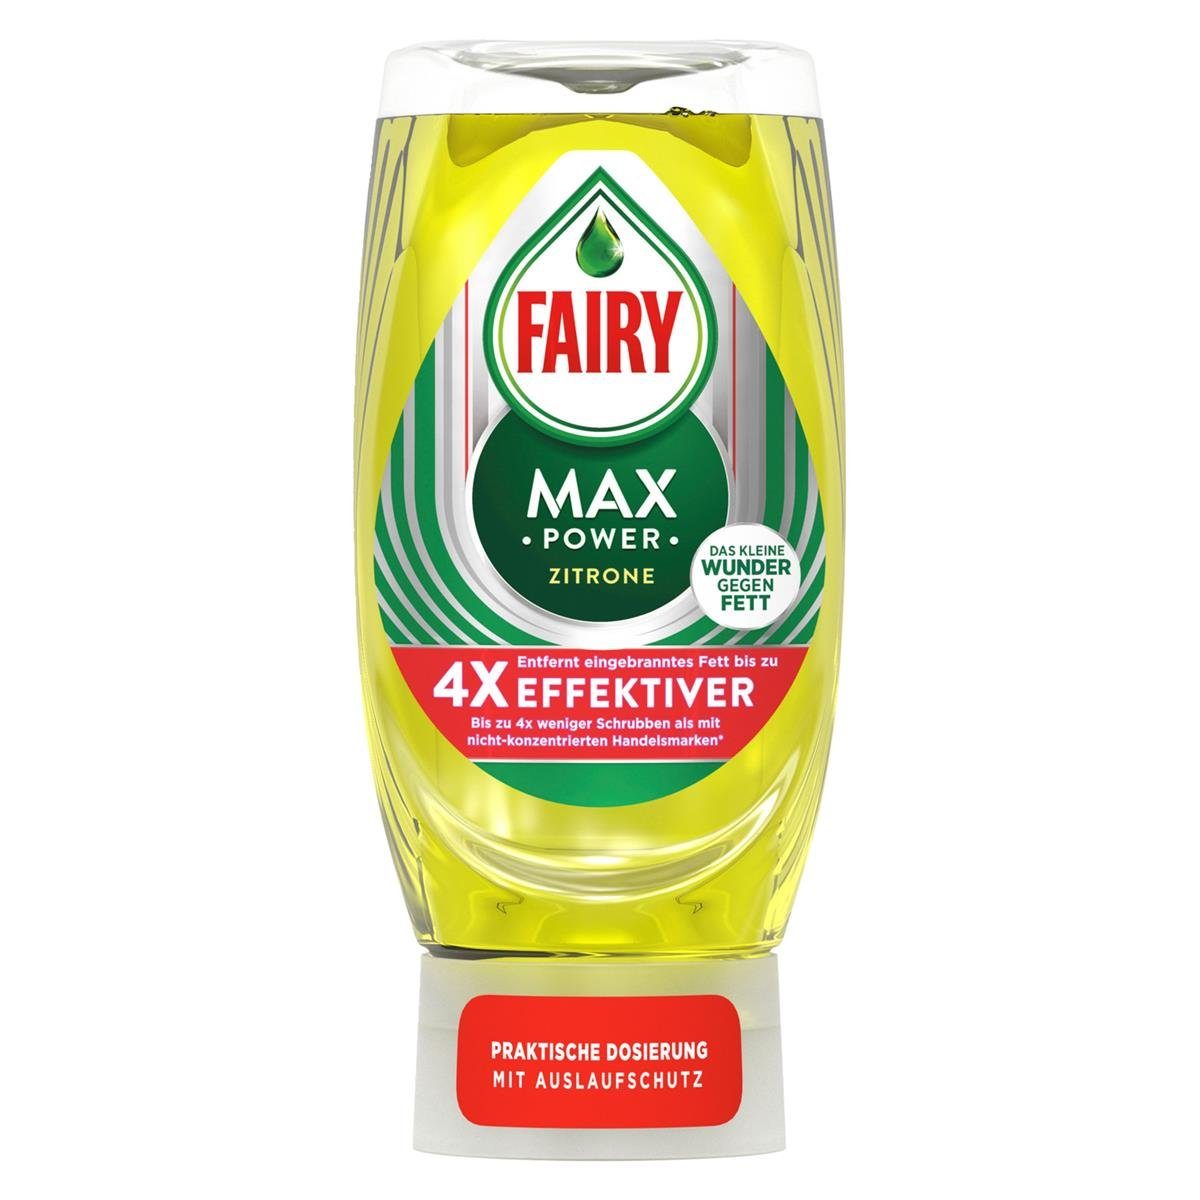 Fairy Fairy Spülmittel Max Power Zitrone 370ml - Wunder gegen Fett (1er Pack Geschirrspülmittel